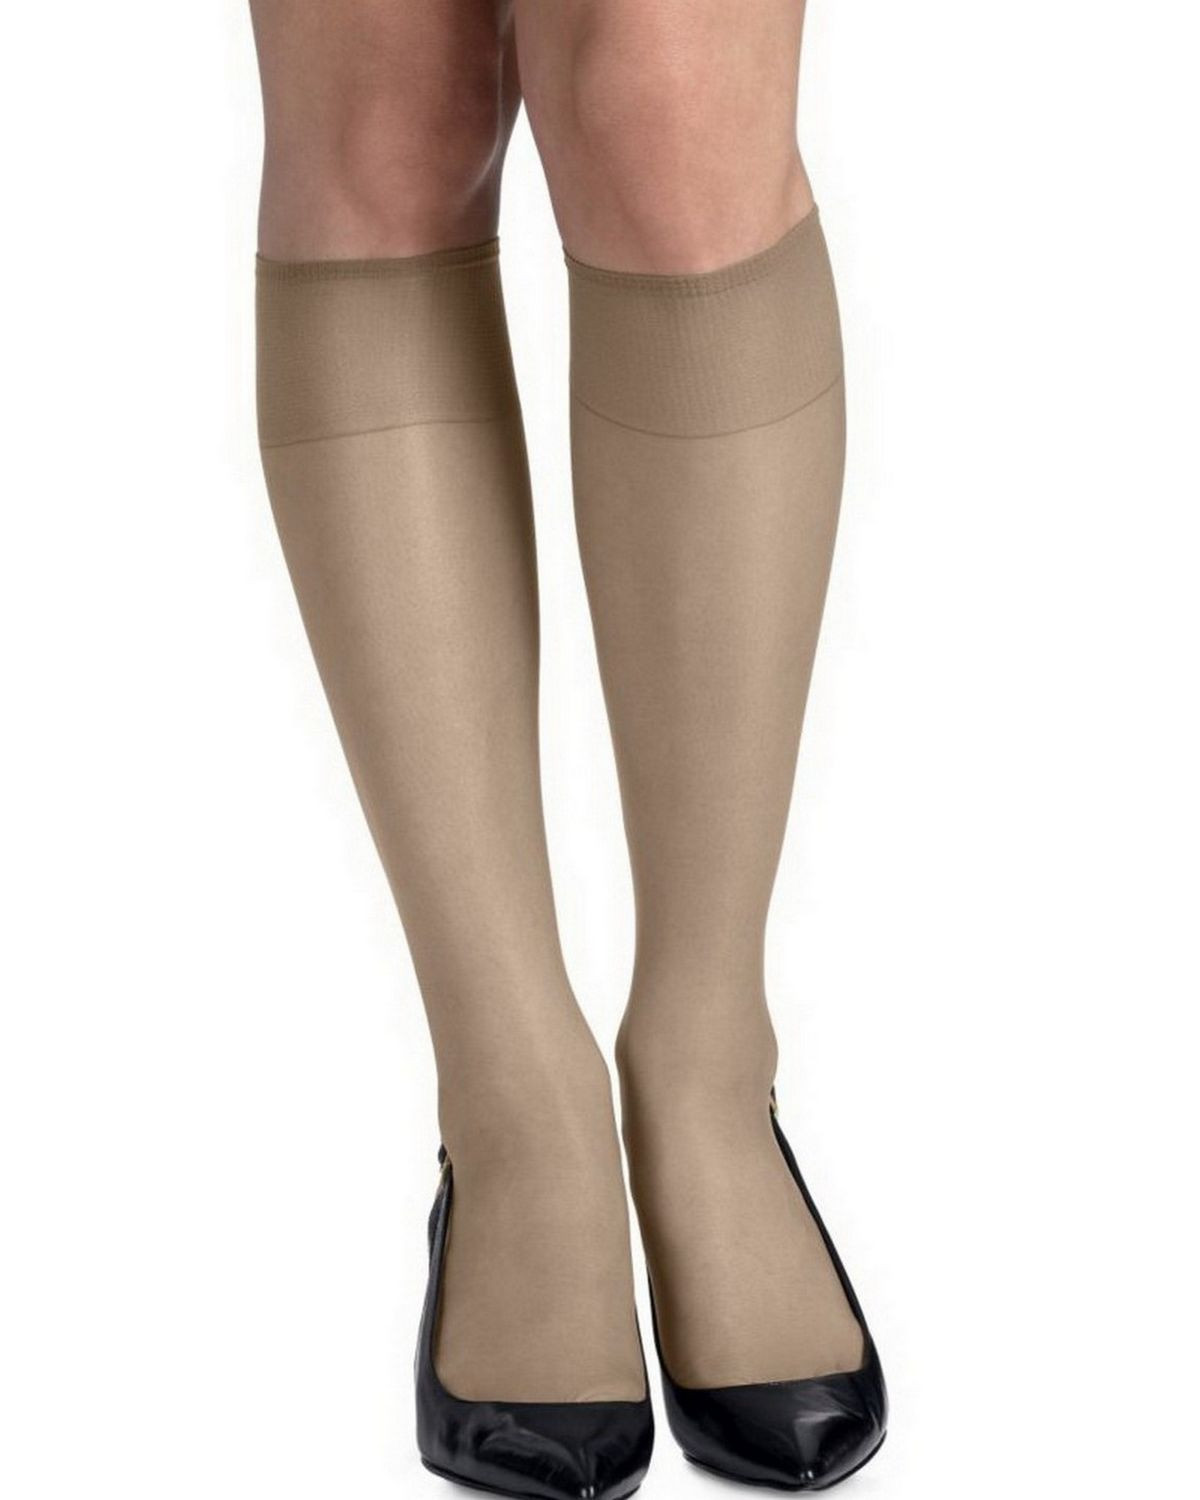 Hanes 775 Women's Silk Reflections Silky Sheer Knee Highs Reinforced Toe 2-Pack - Travel Buff - One Size #silk